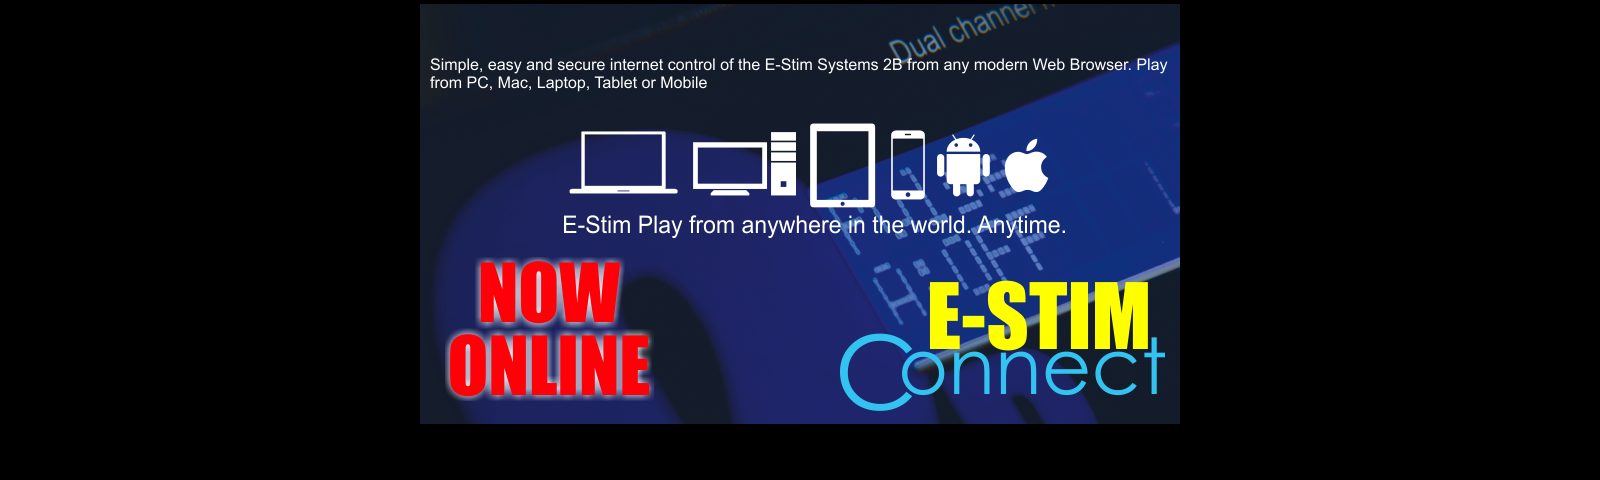 E-Stim Connect - E-Stim play across the web